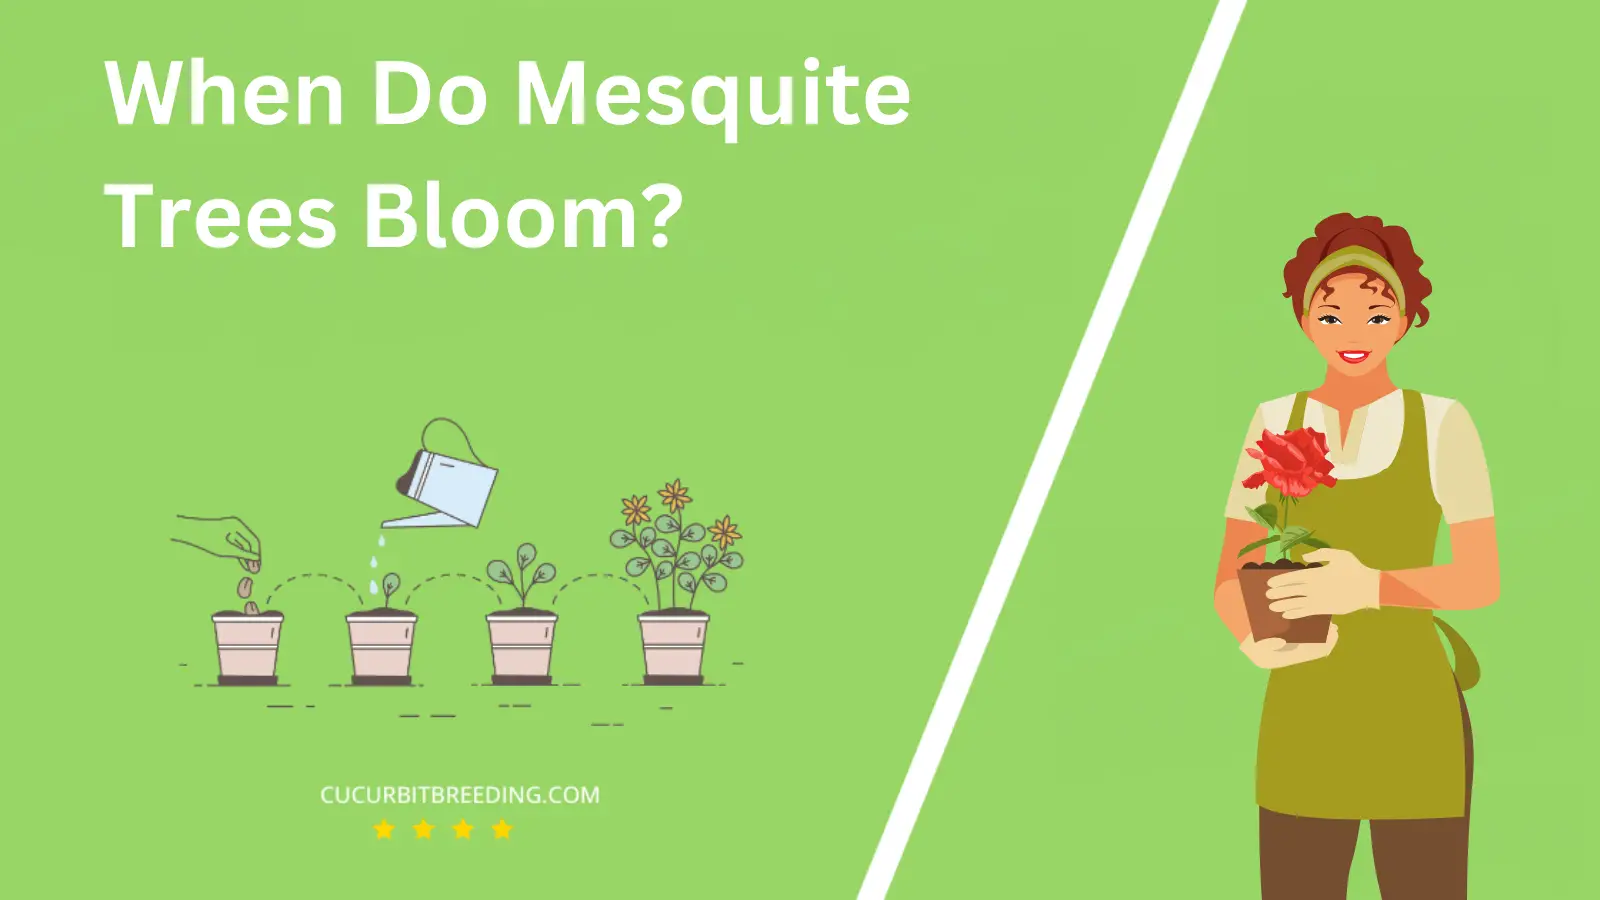 When Do Mesquite Trees Bloom?